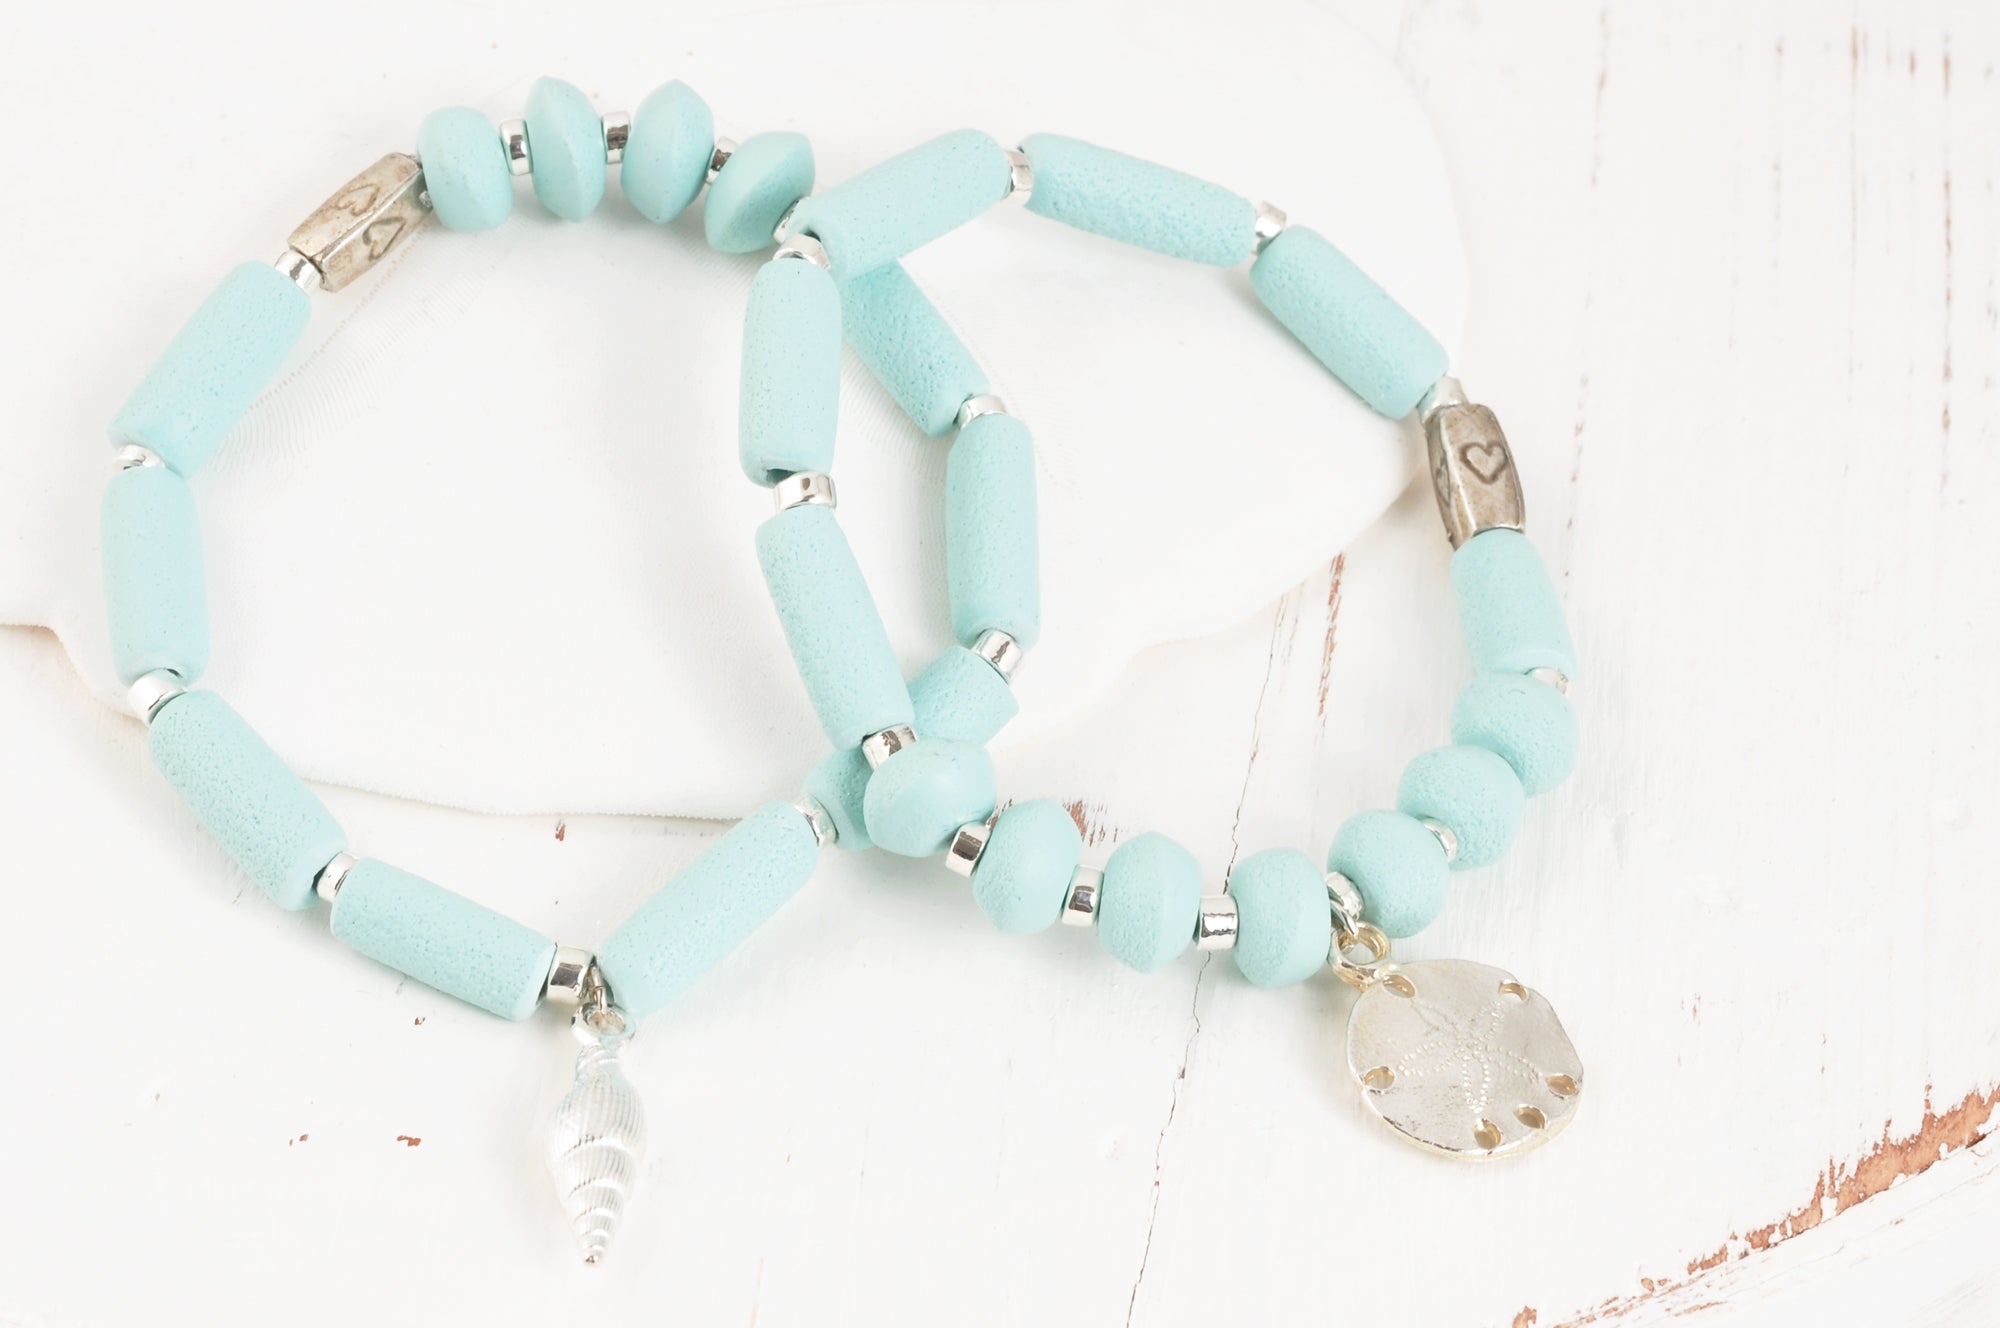 Seafoam Blue Bracelet Bead Kits choiyeonhee